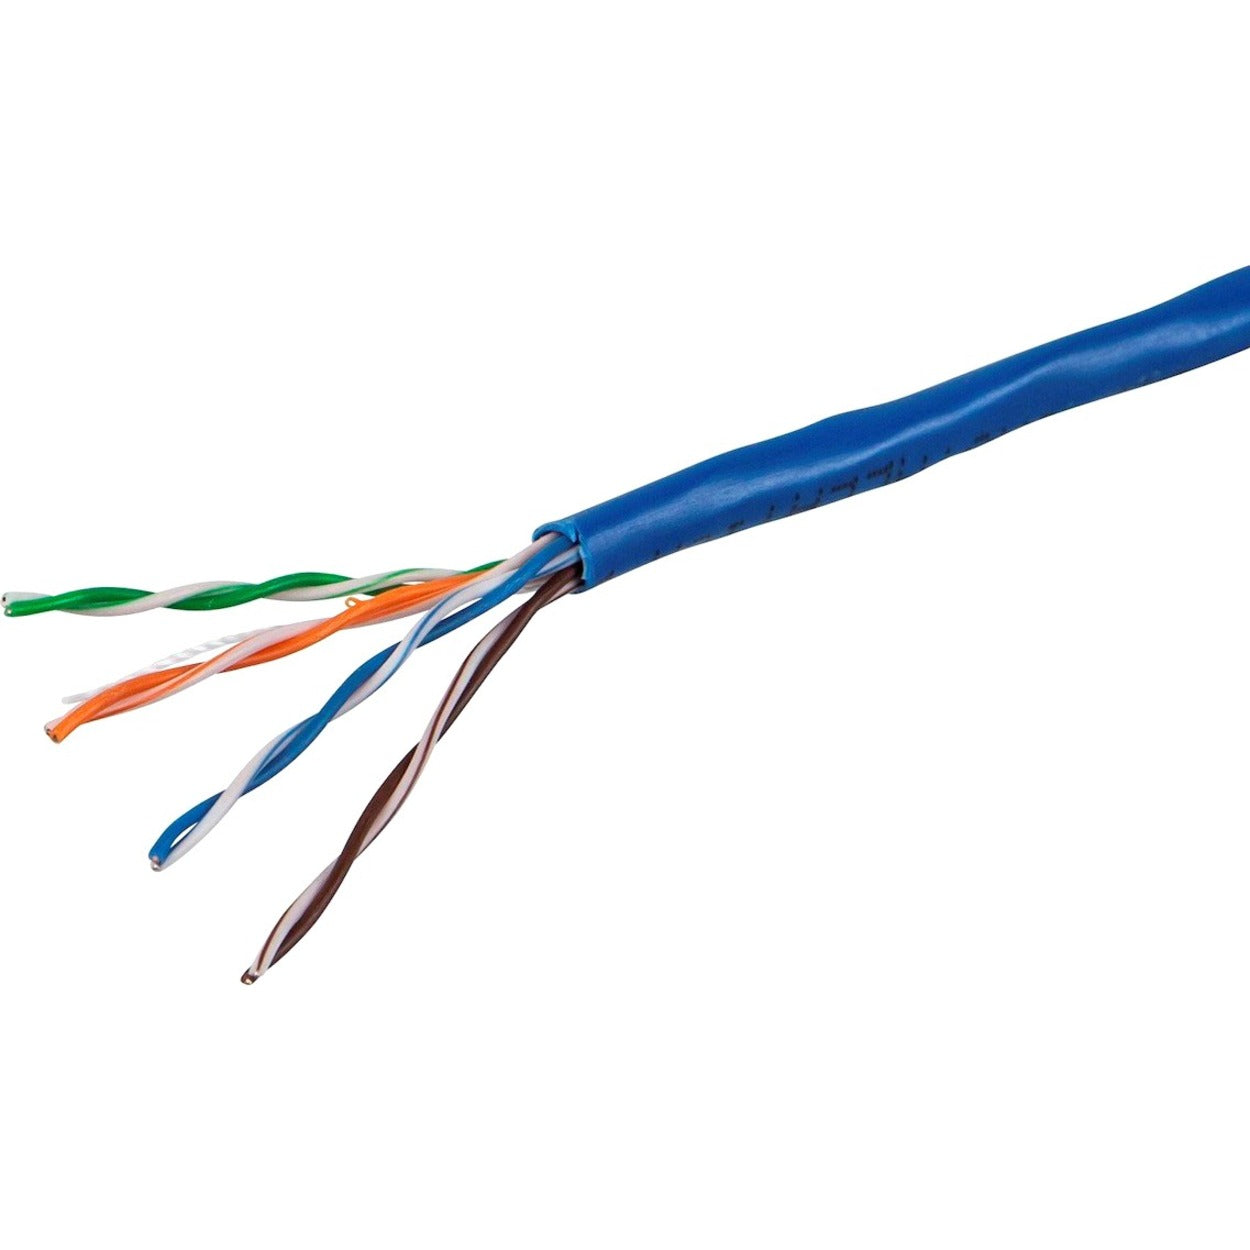 Monoprice 12757 Cat. 5e UTP Network Cable, 1000 ft, Blue